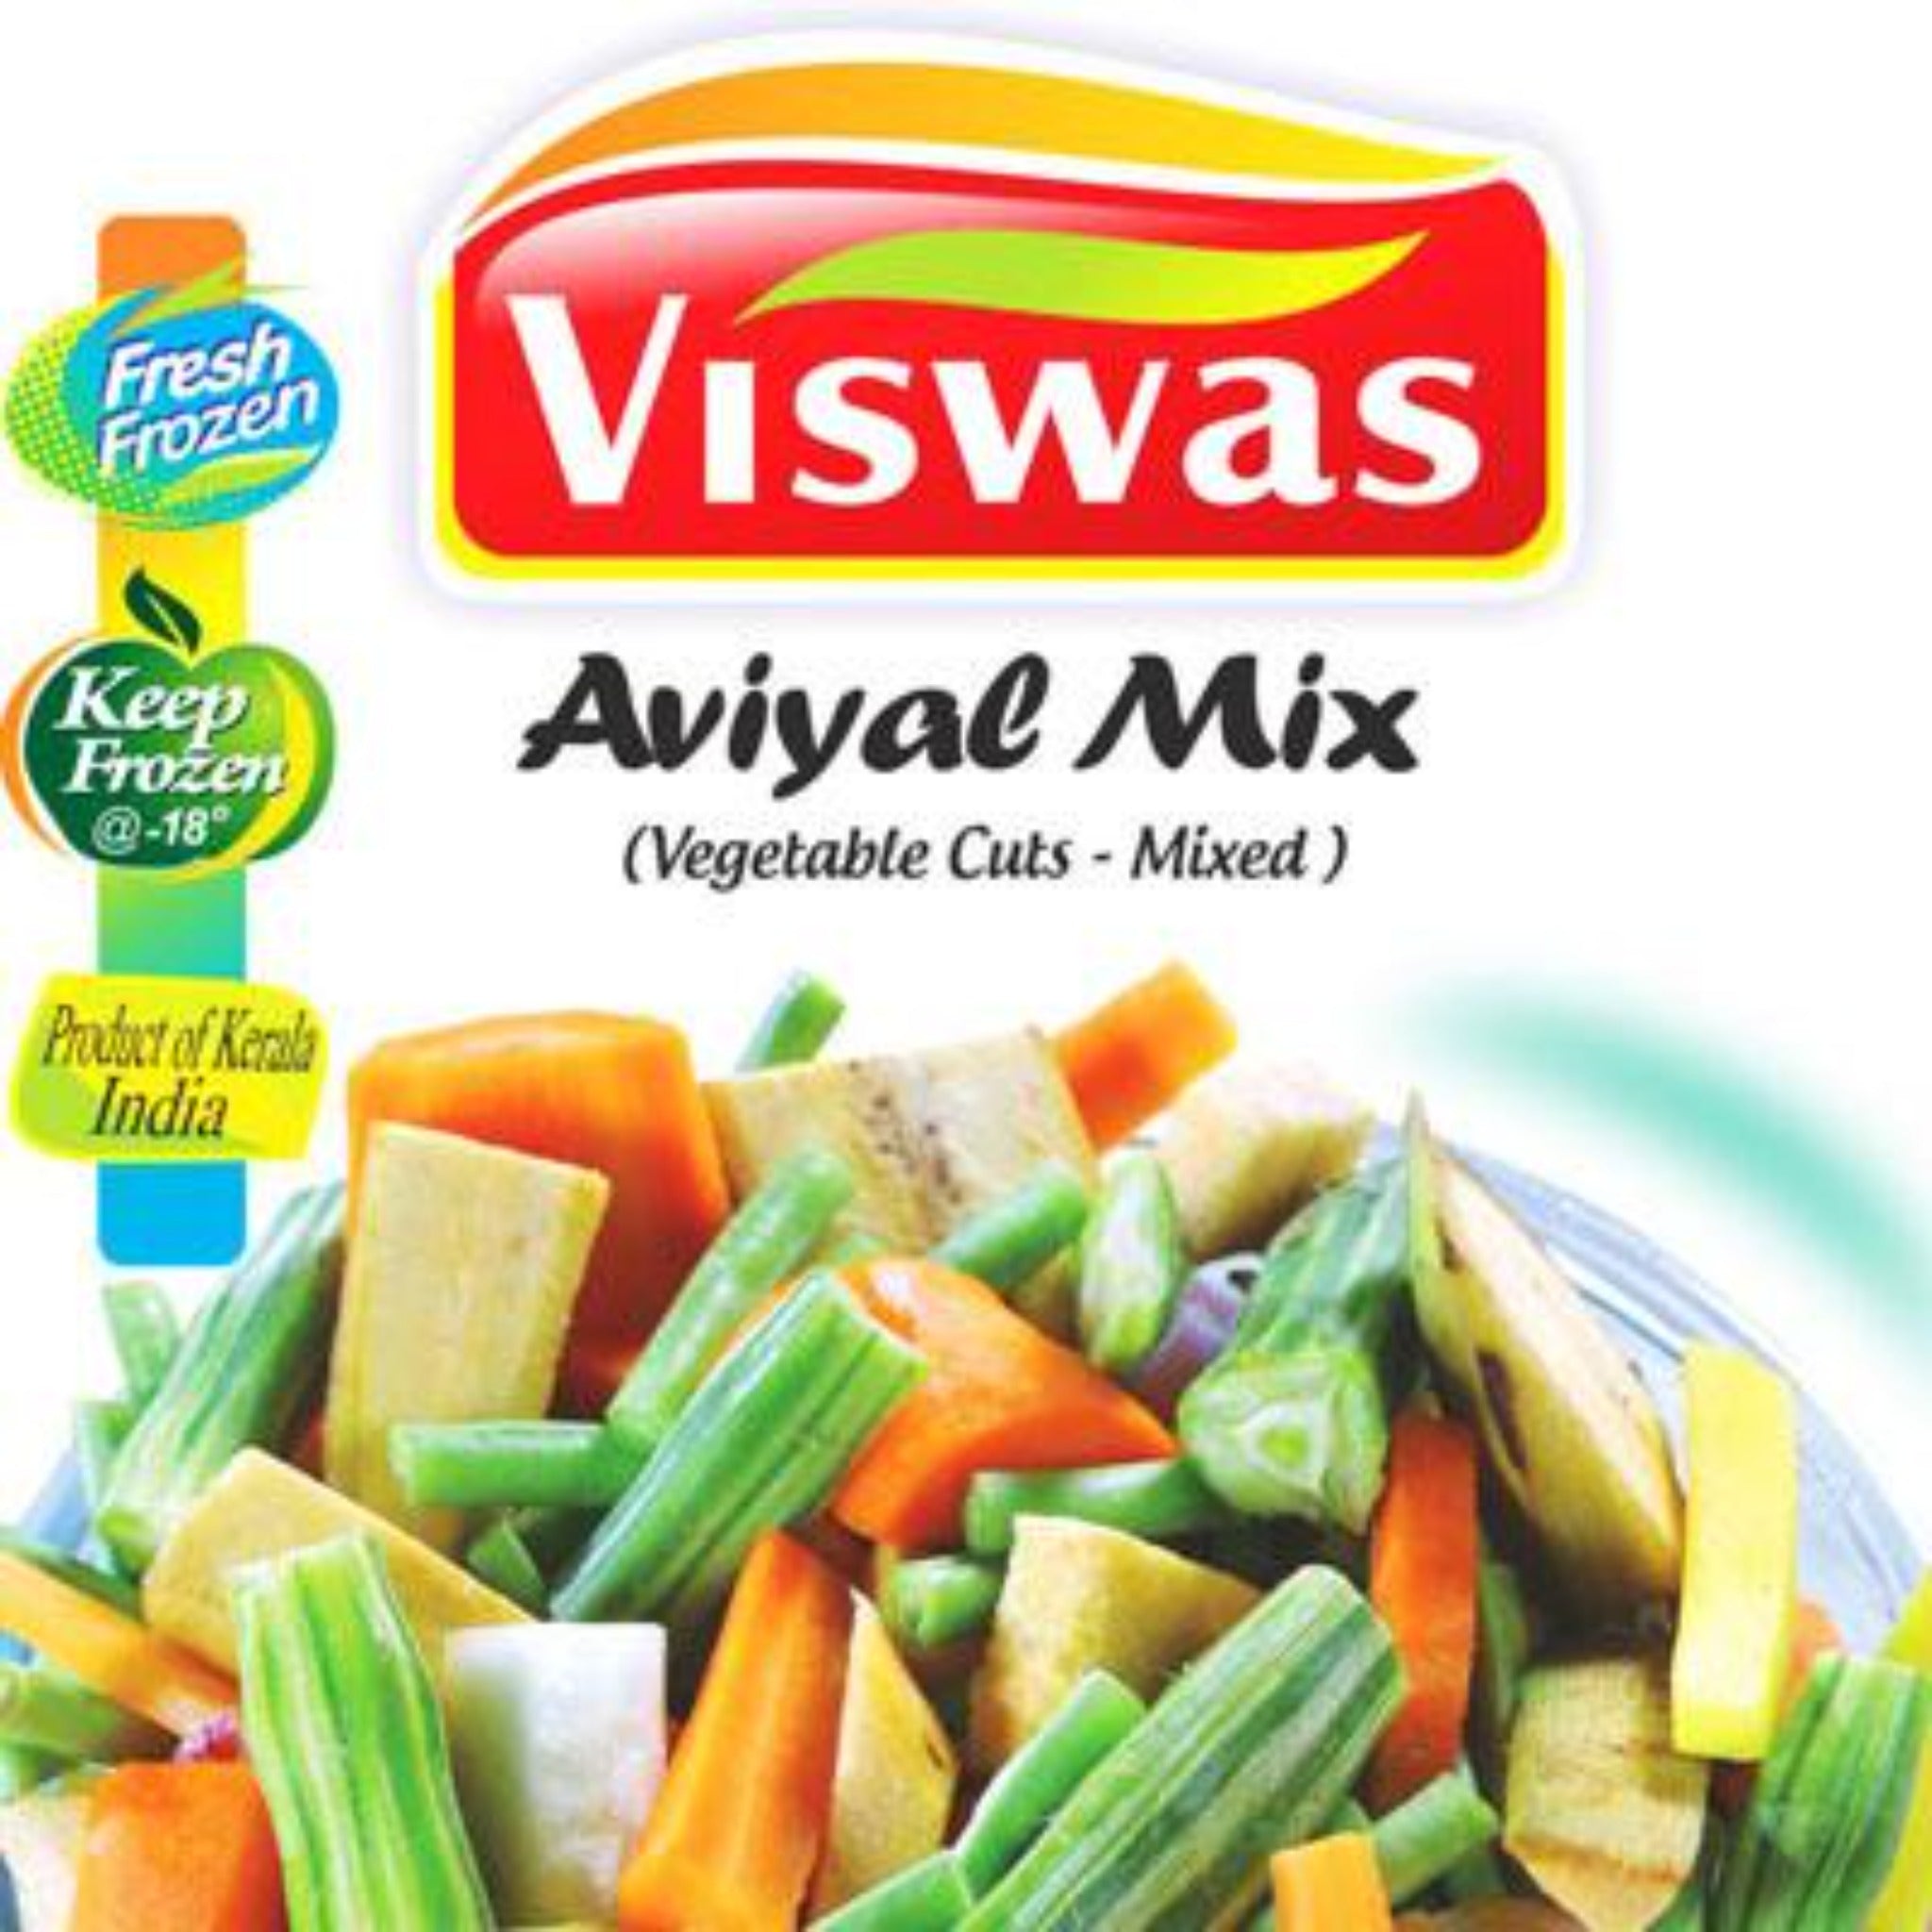 Viswas Aviyal Mix 400g